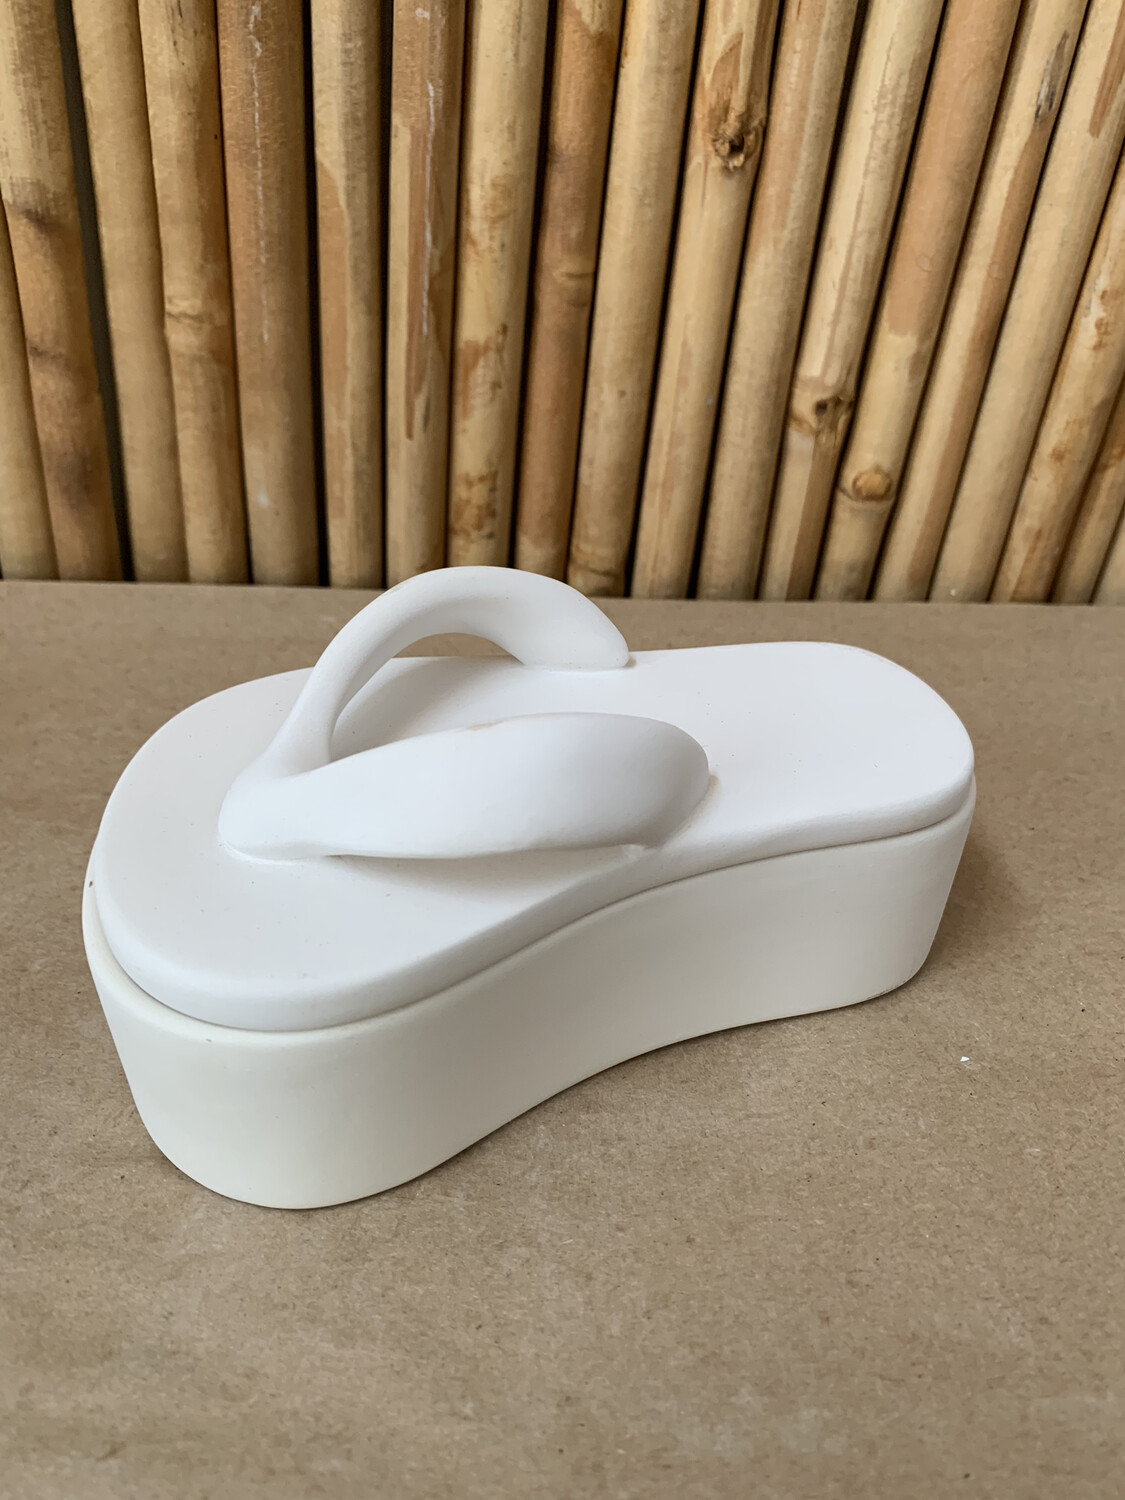 Paint Your Own Pottery - Ceramic
Flip Flop Sandal Box Painting Kit